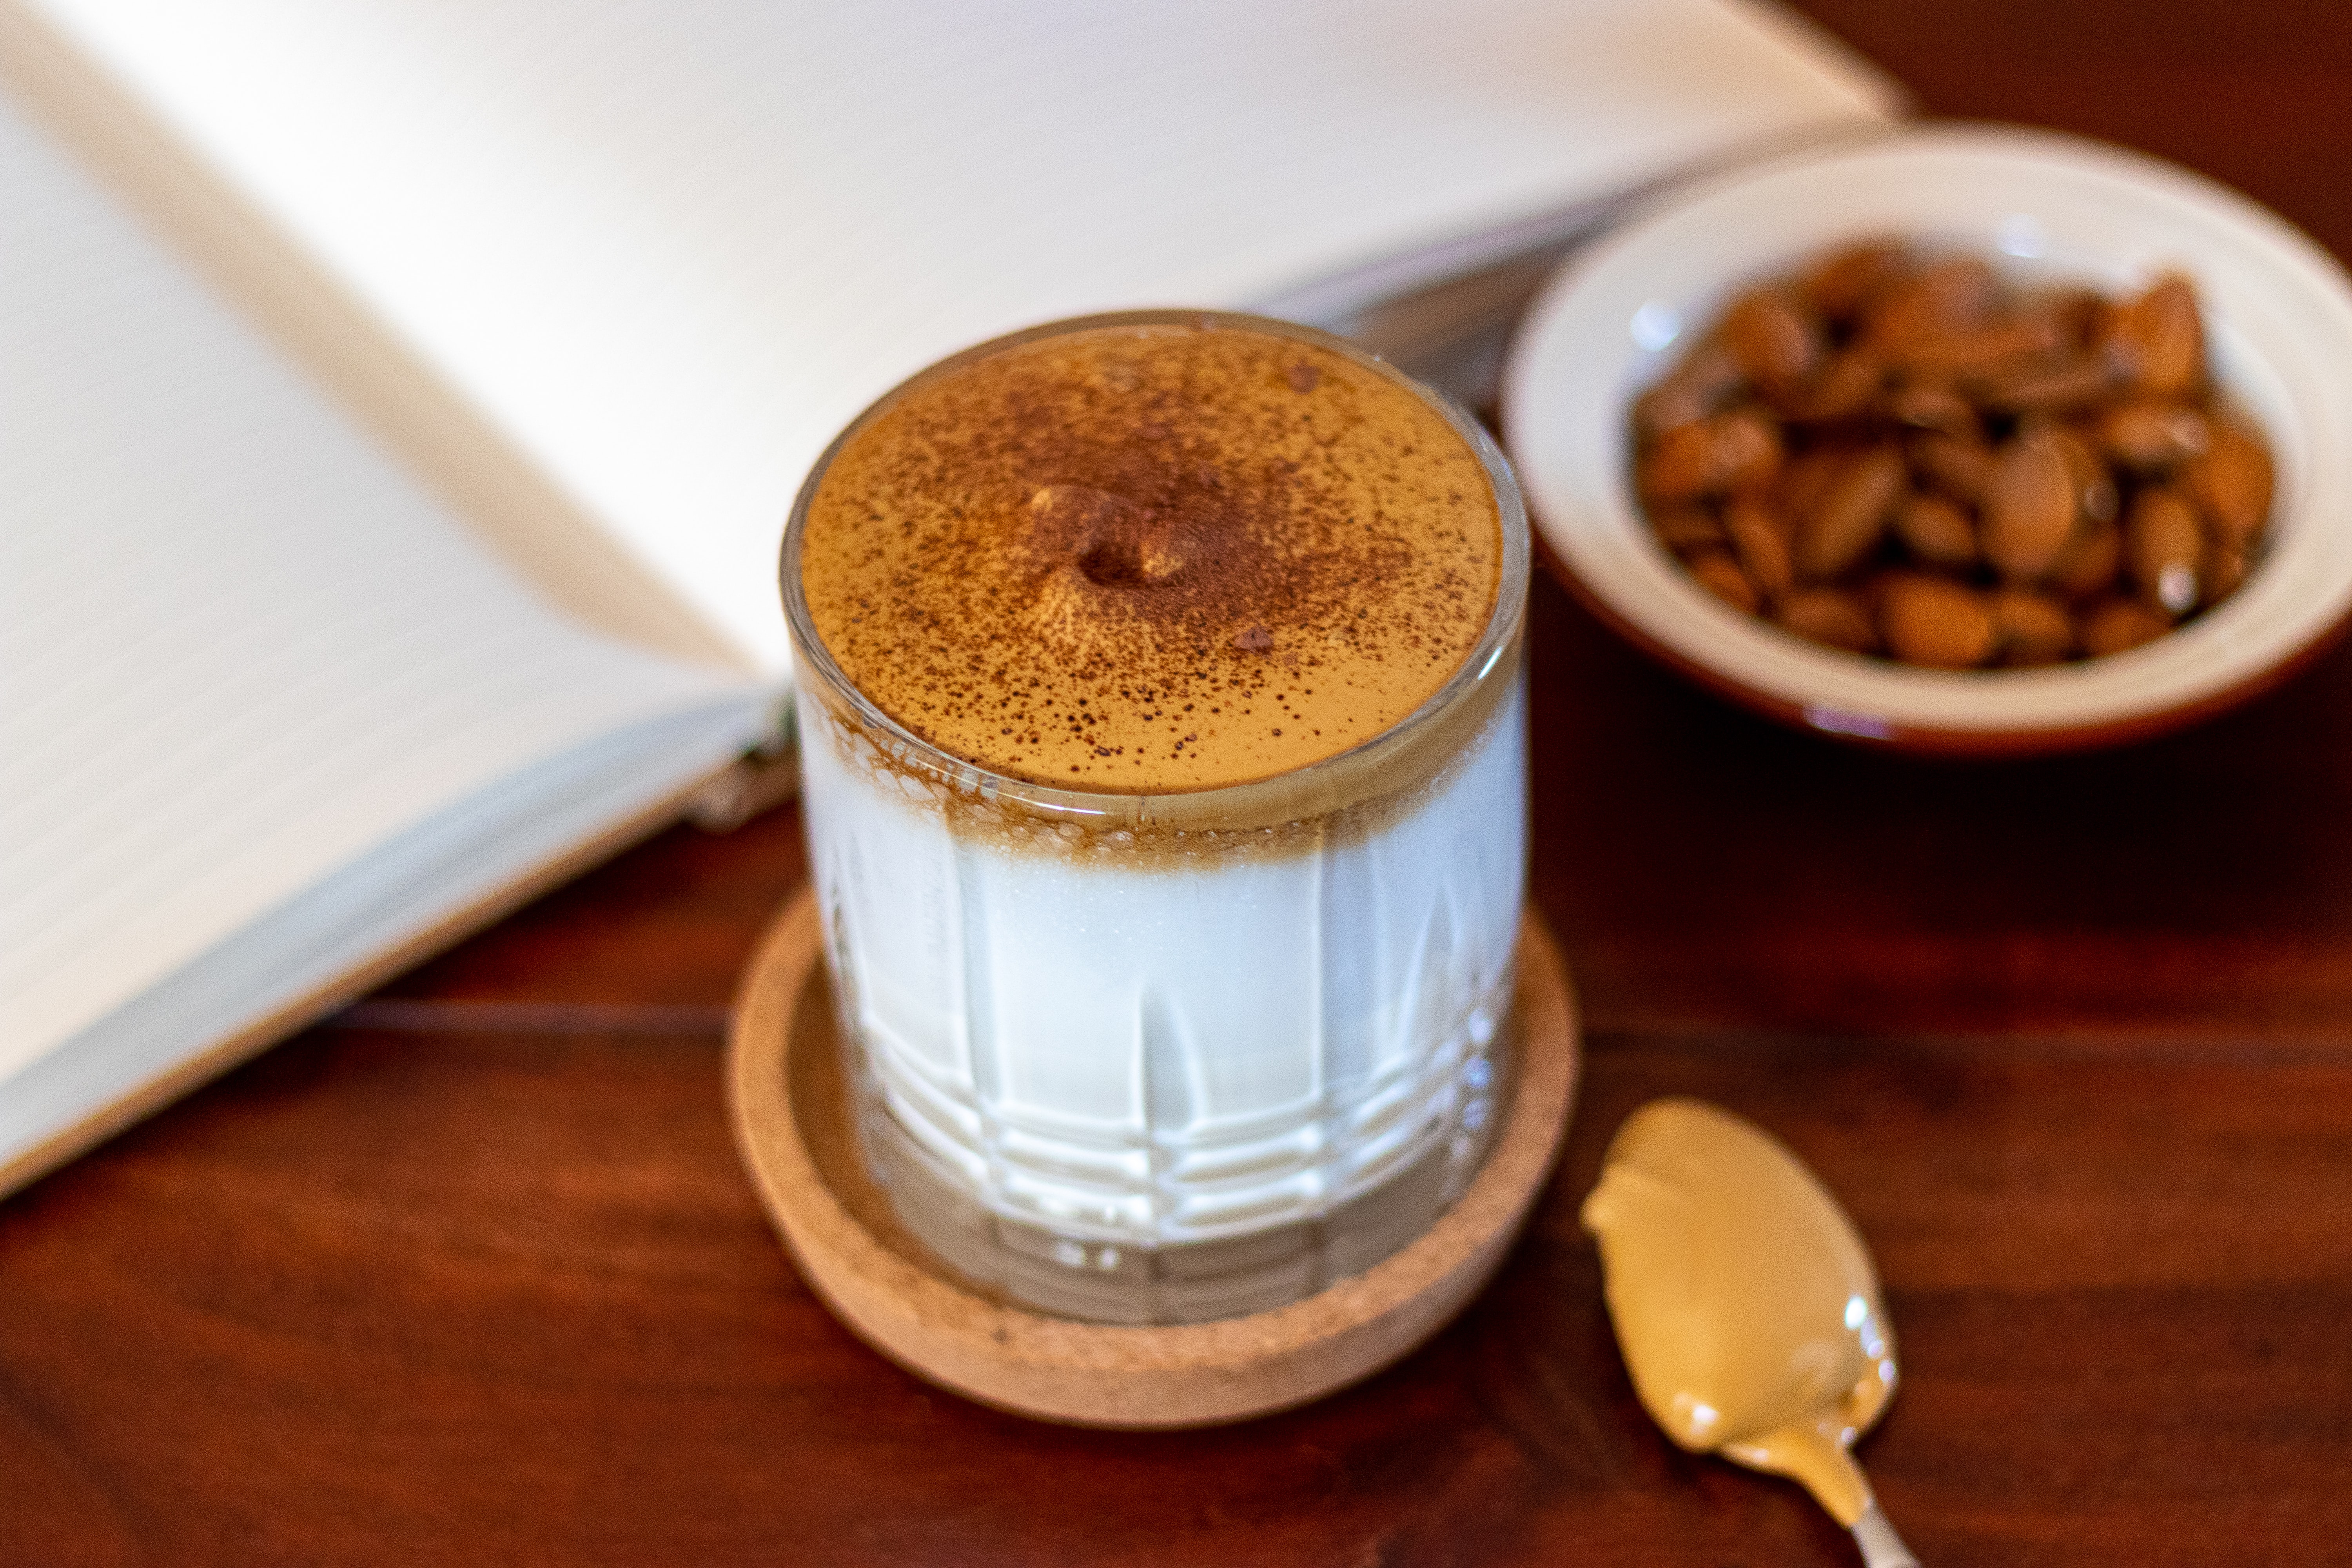 Discover How to Make Dalgona Coffee - Korean Whipped Coffee